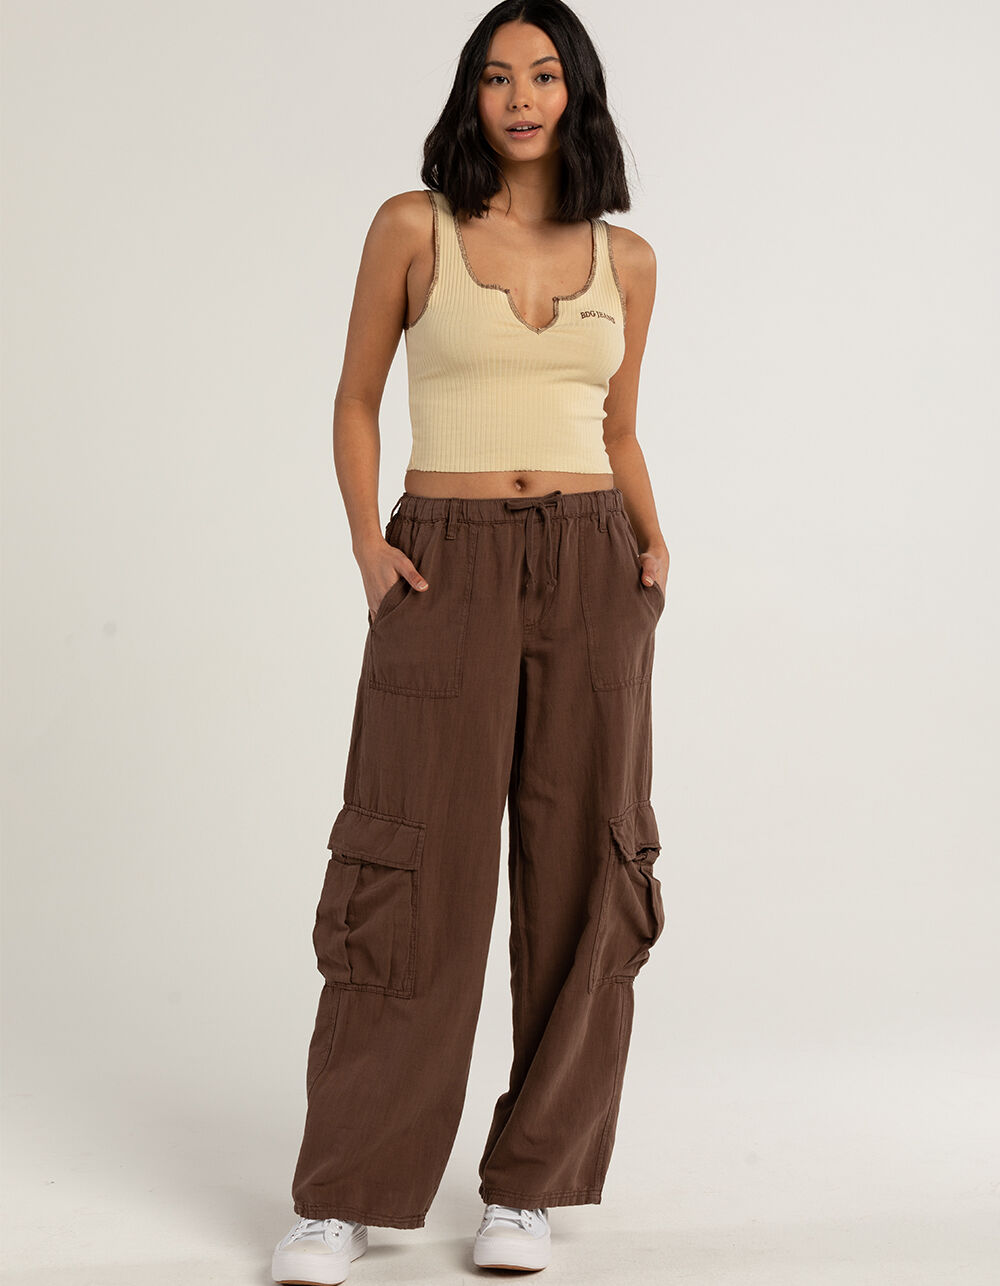 Cargo Pants Women Women's Cotton Linen Pants Casual High Waisted